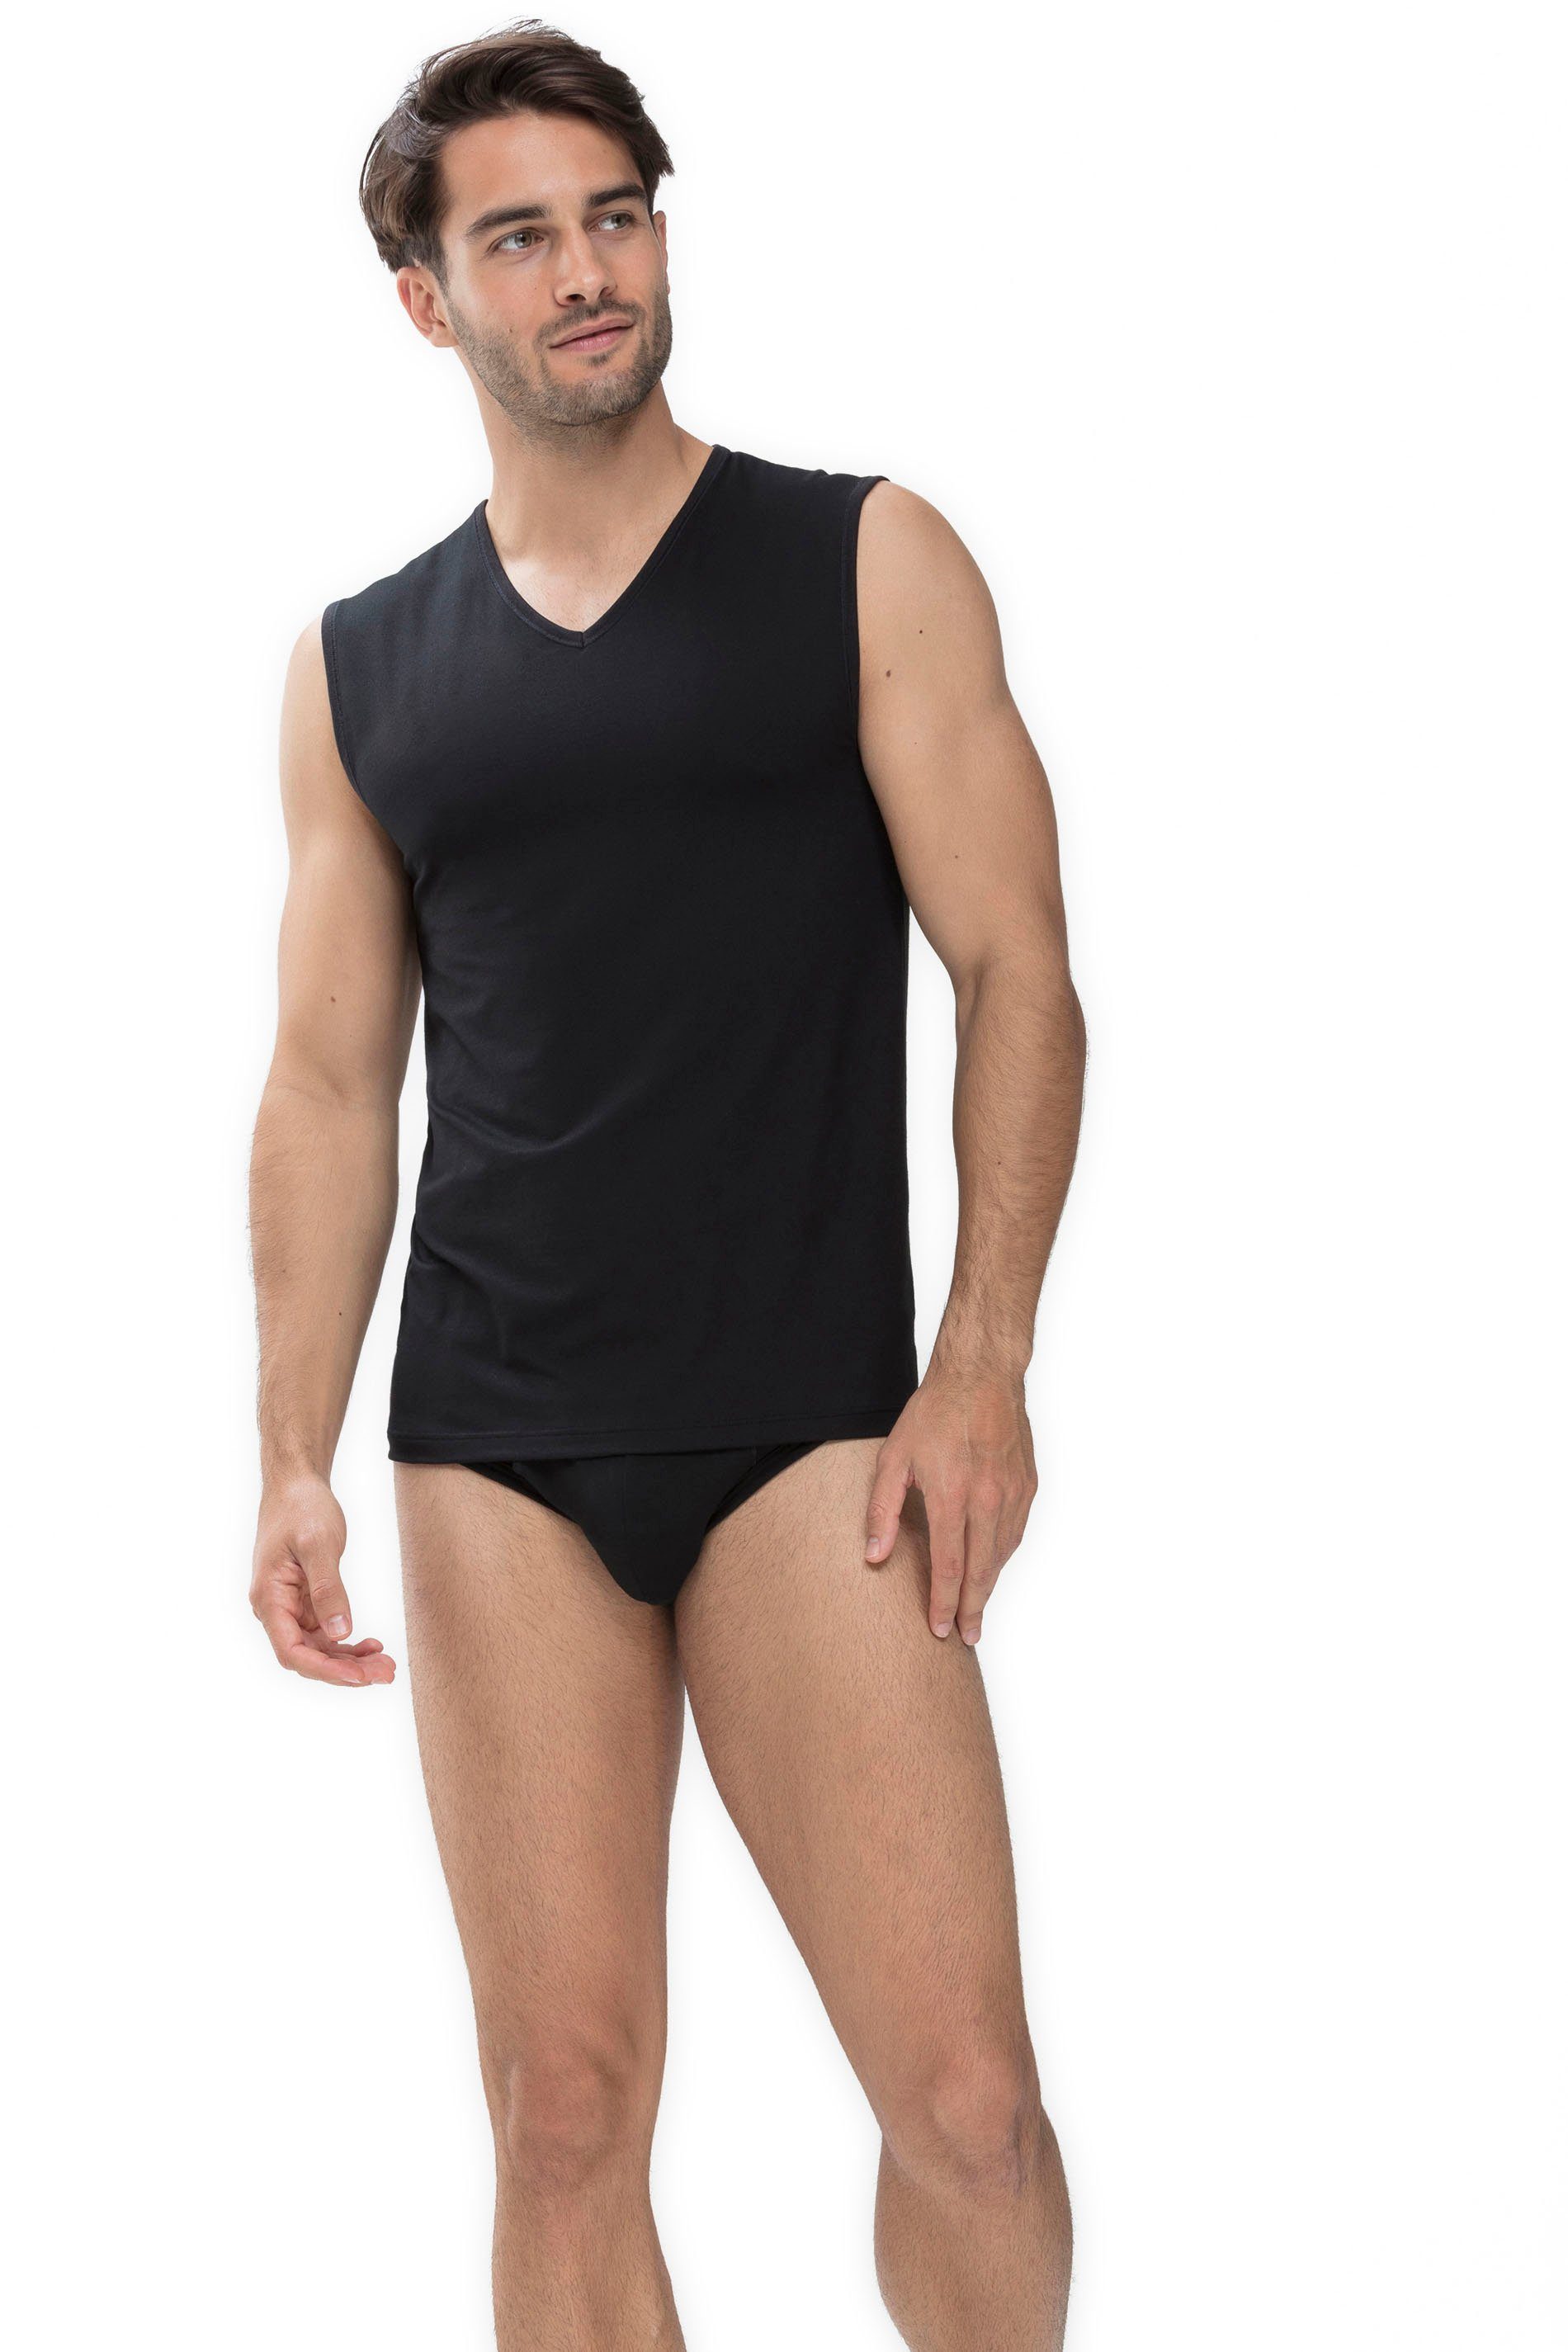 Mey Unterhemd (Einzelteil, 1-St., 1 Stück) Muskelshirt, atmungsaktiv, V-Ausschnitt,  auch in Übergrößen, 1 Stück